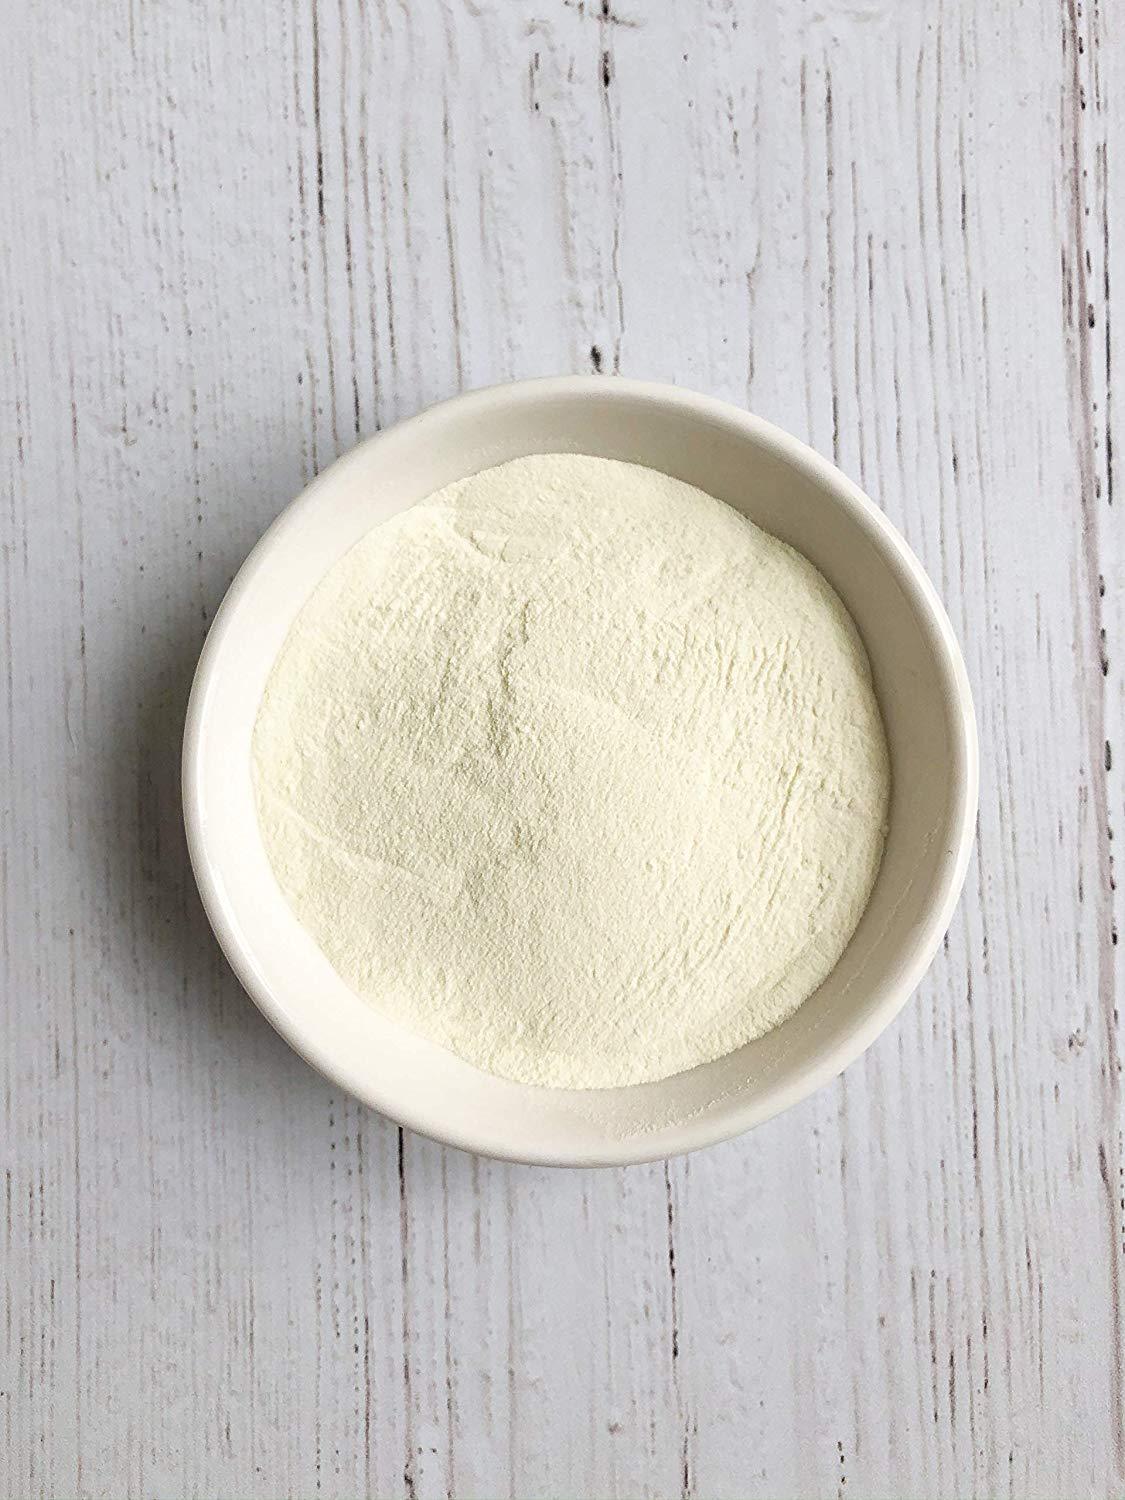 Premium Powdered Buttermilk: Non-GMO & Gluten-Free